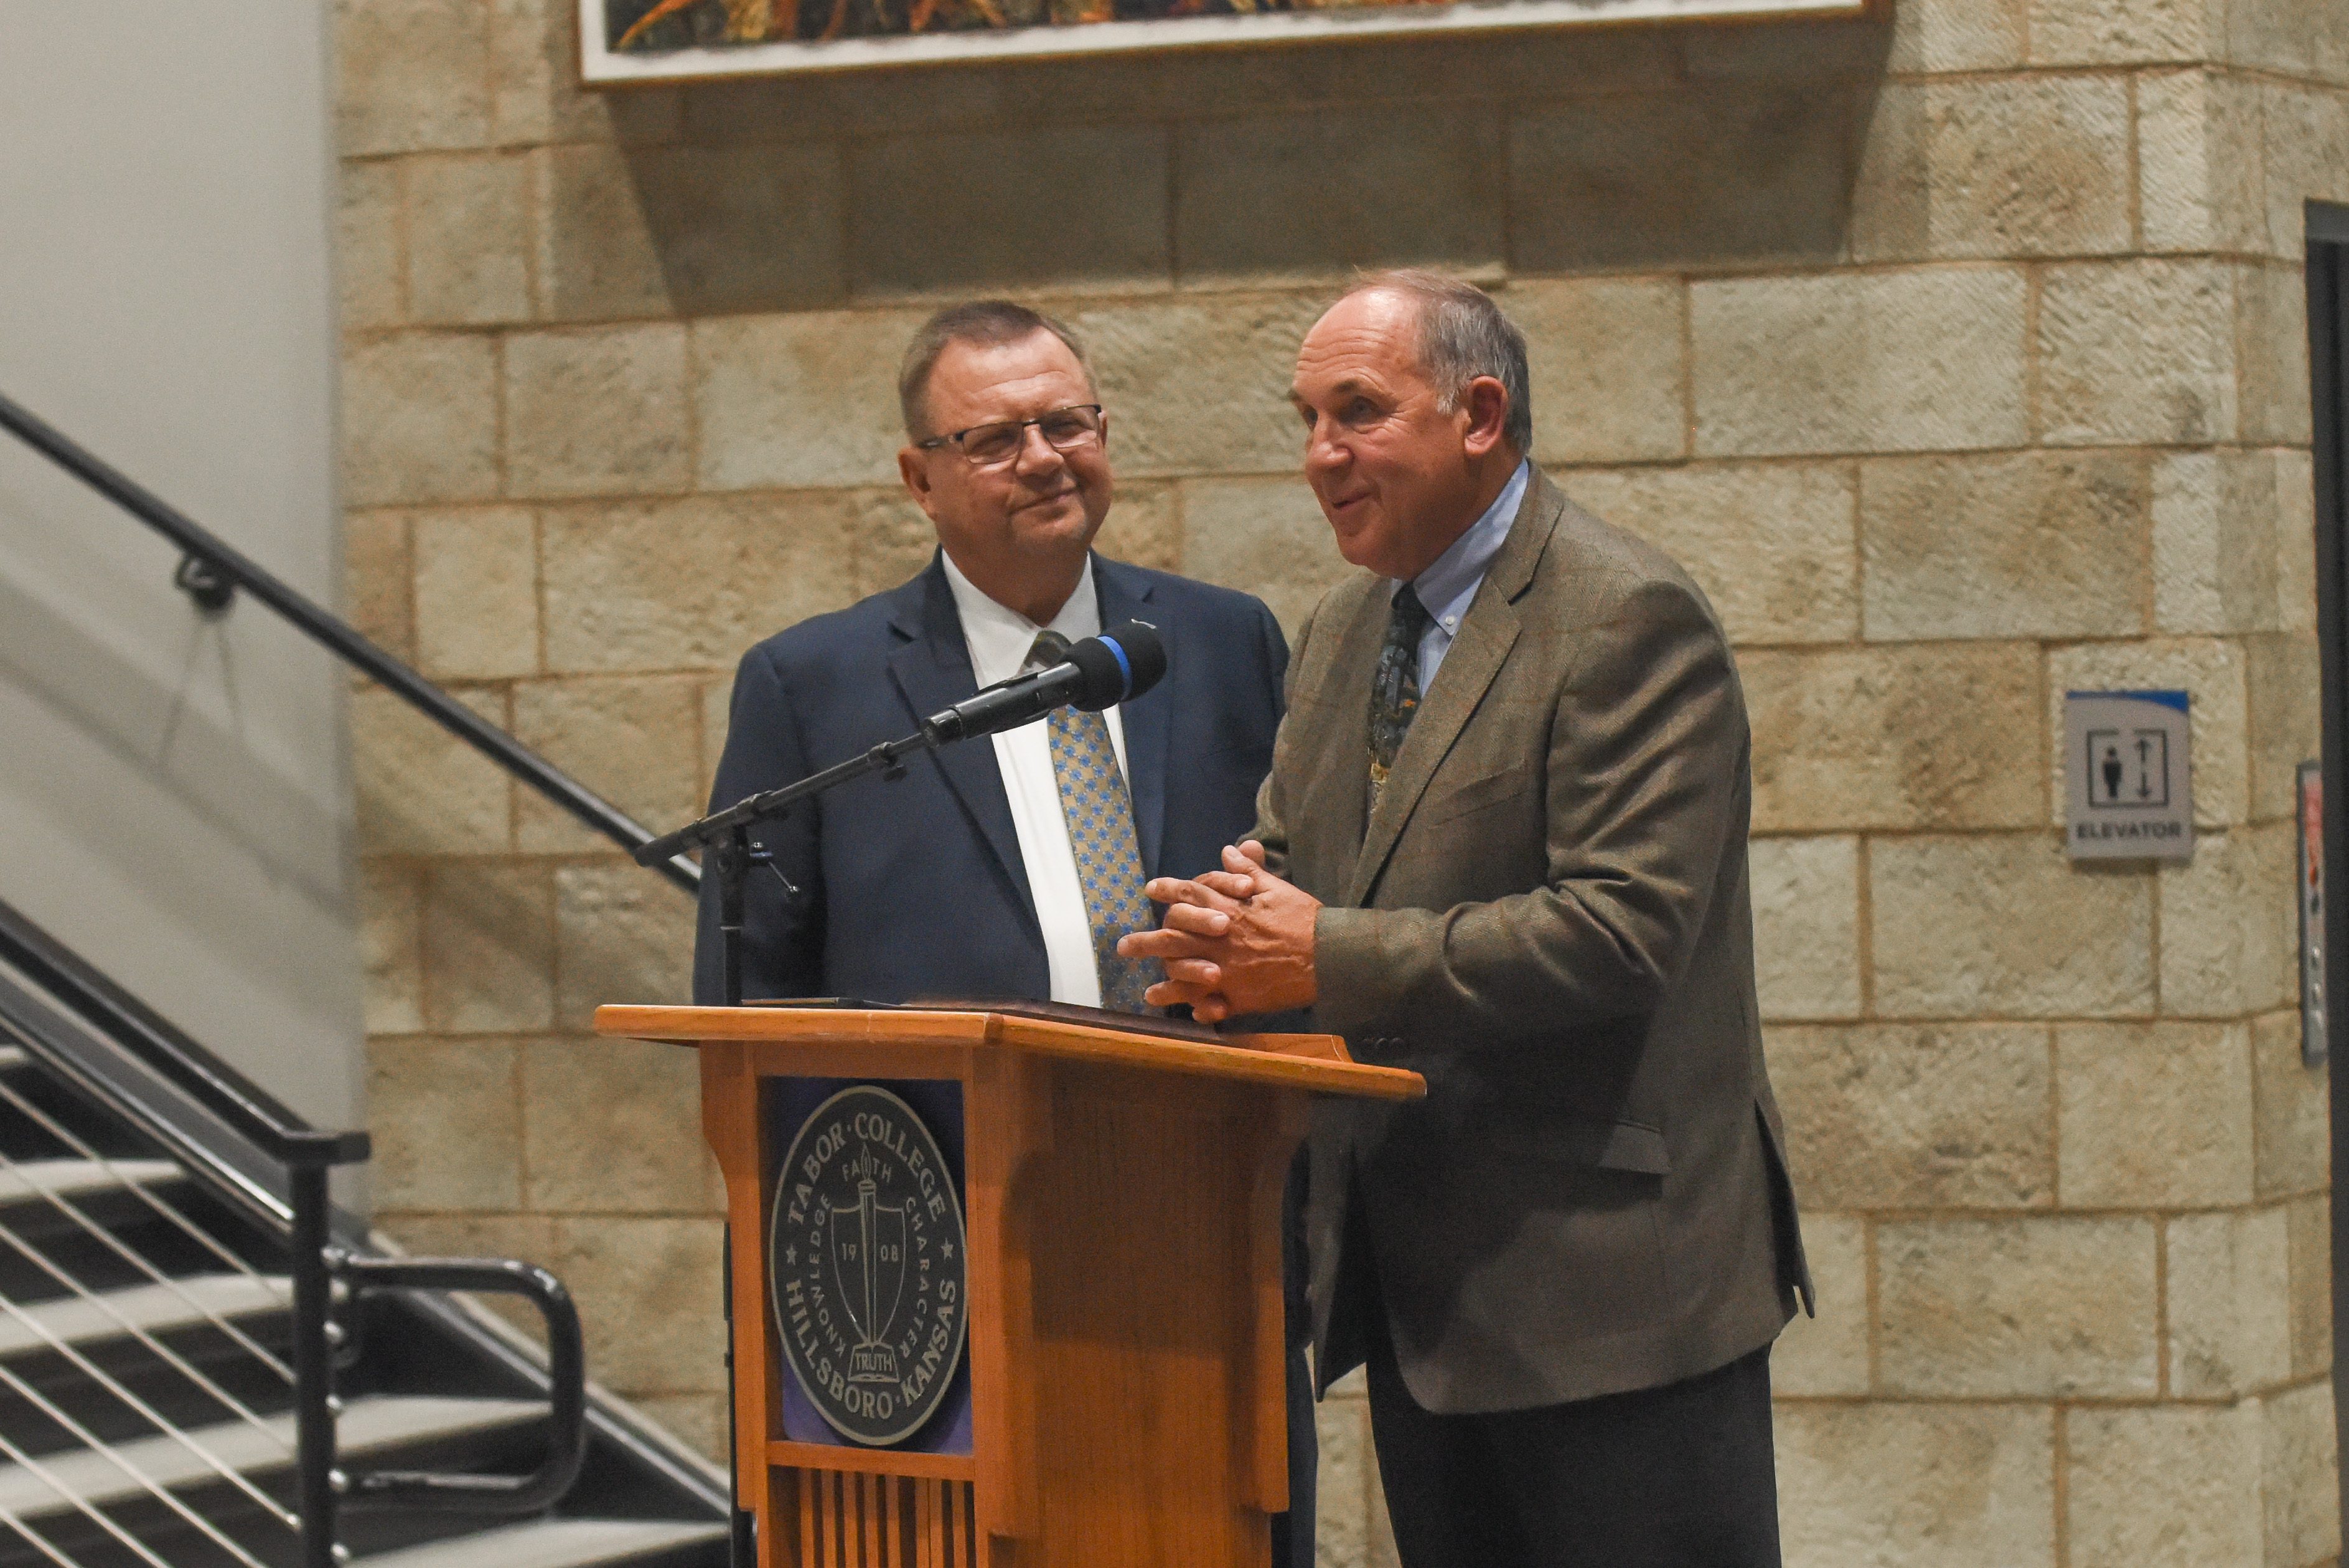 Chuck Flaming receives the Honorary Alumni Award